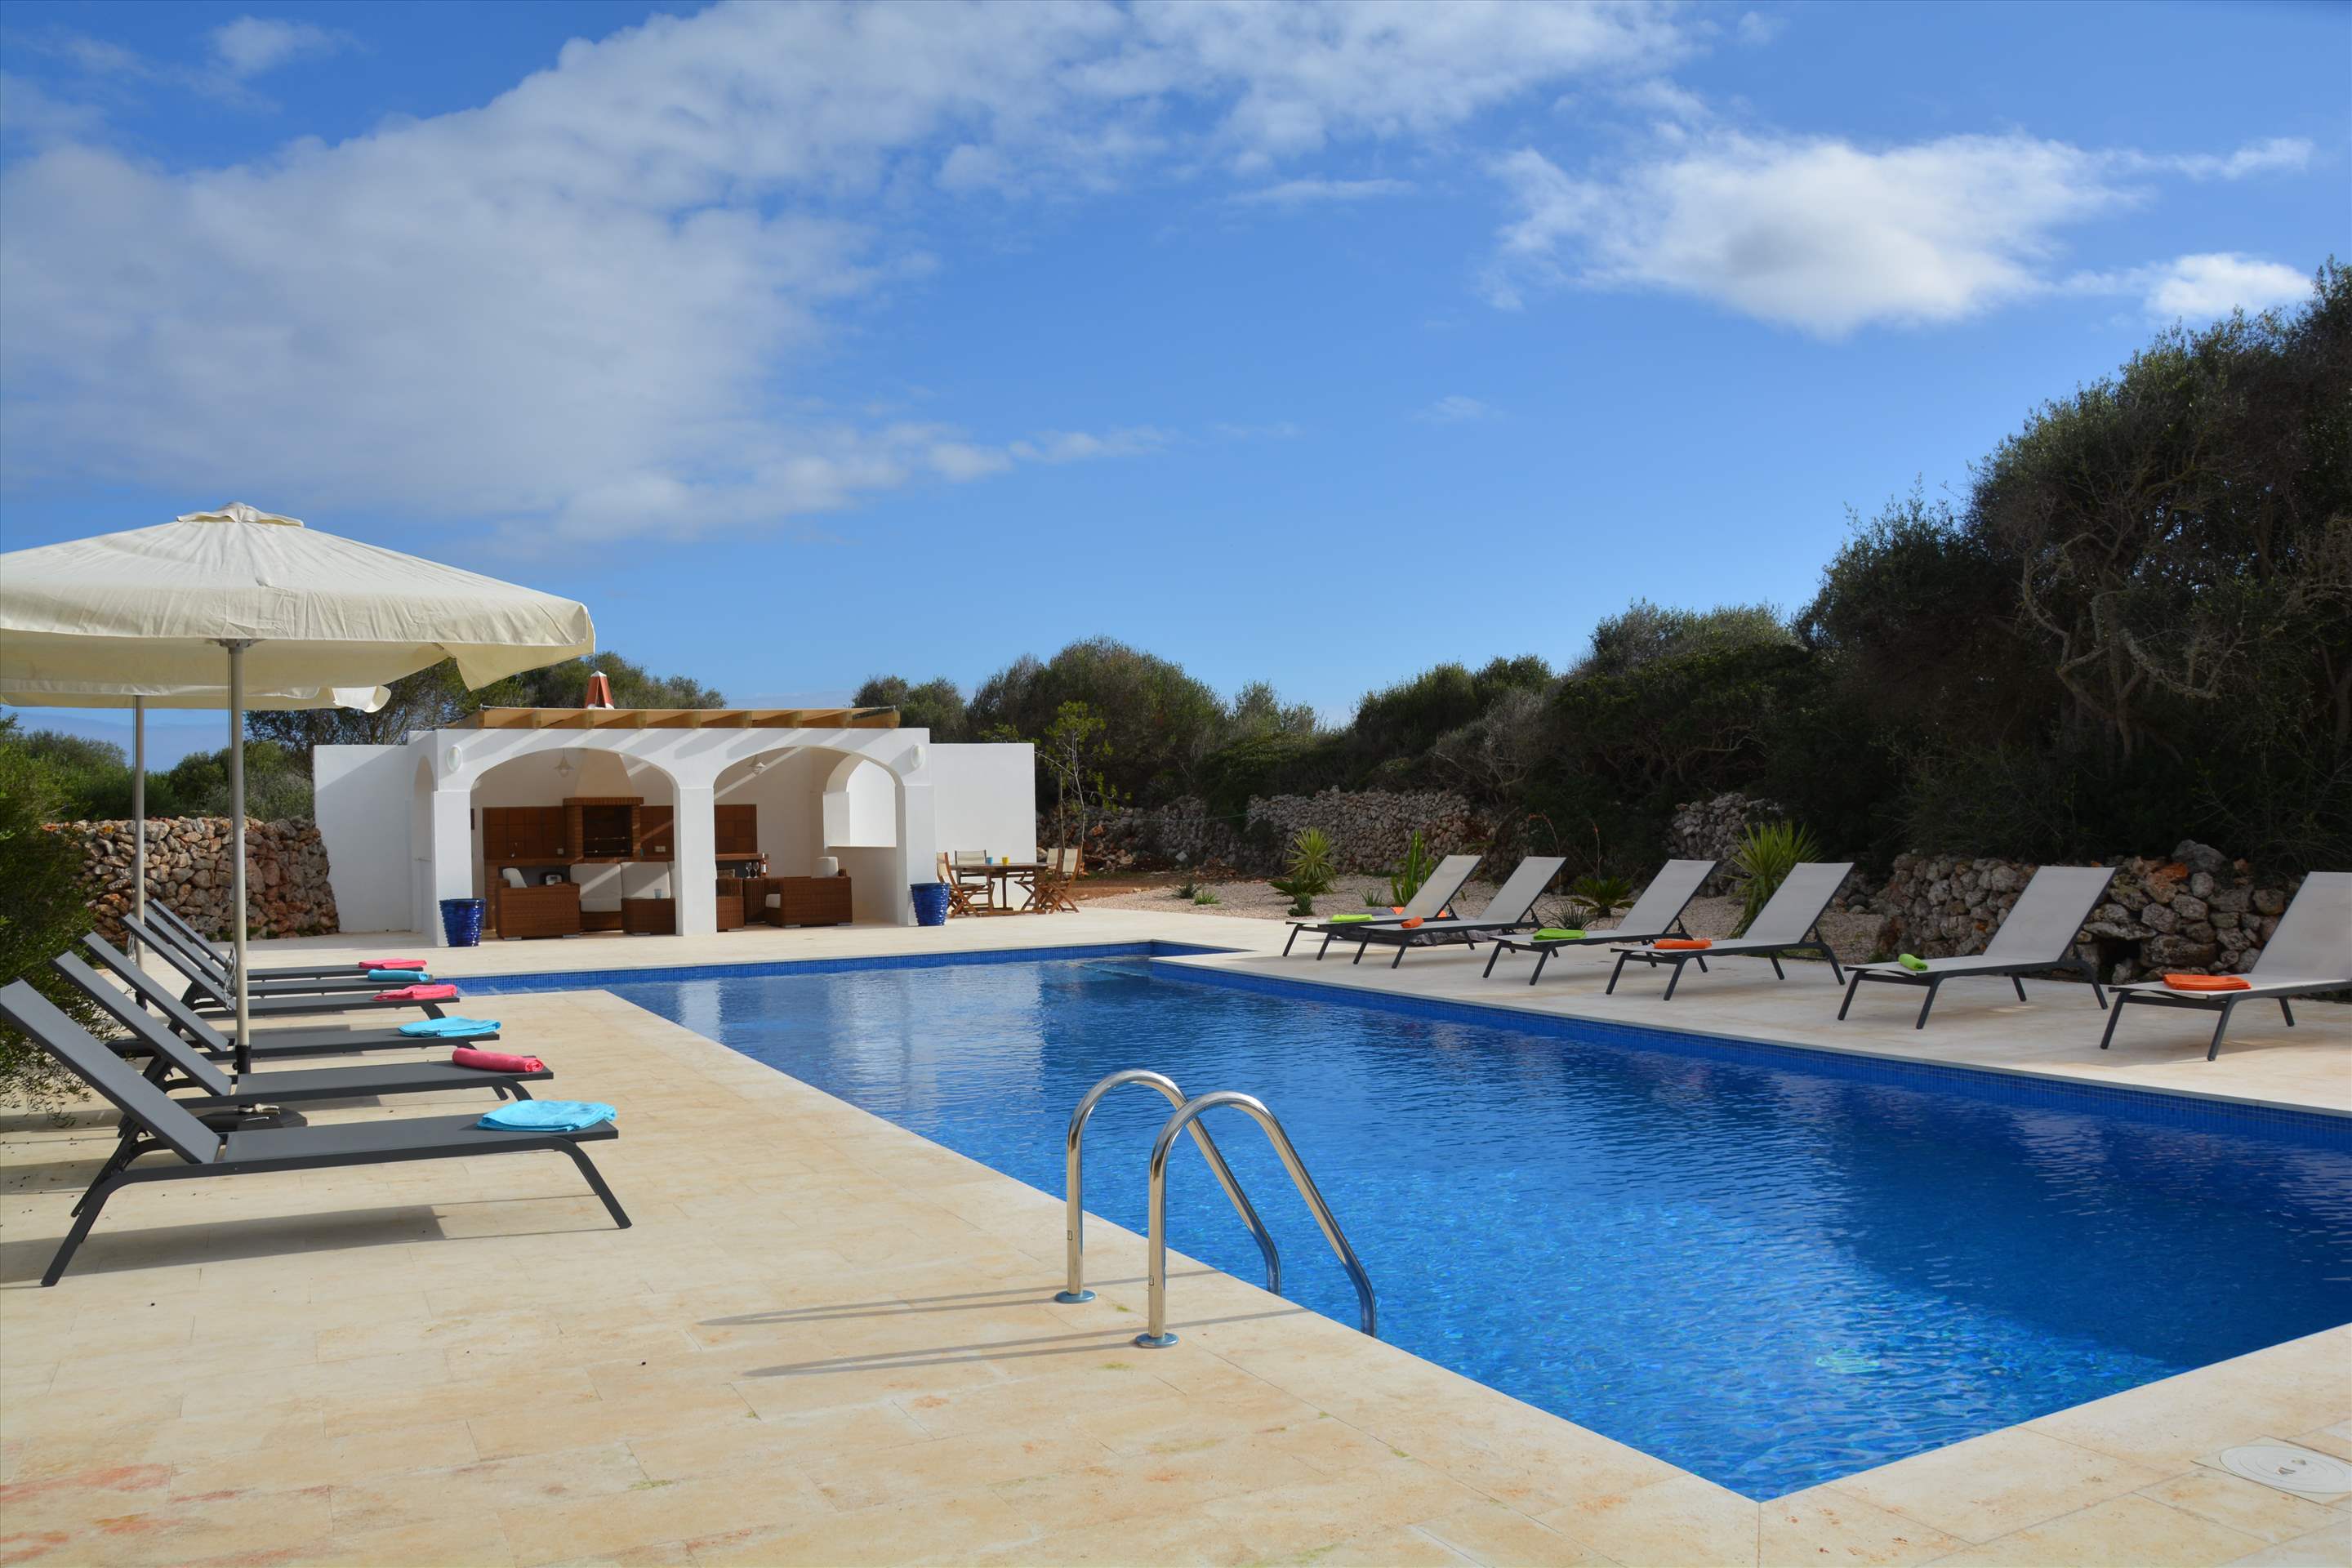 Les Arcs, 5 bedroom villa in Mahon, San Luis & South East, Menorca Photo #12